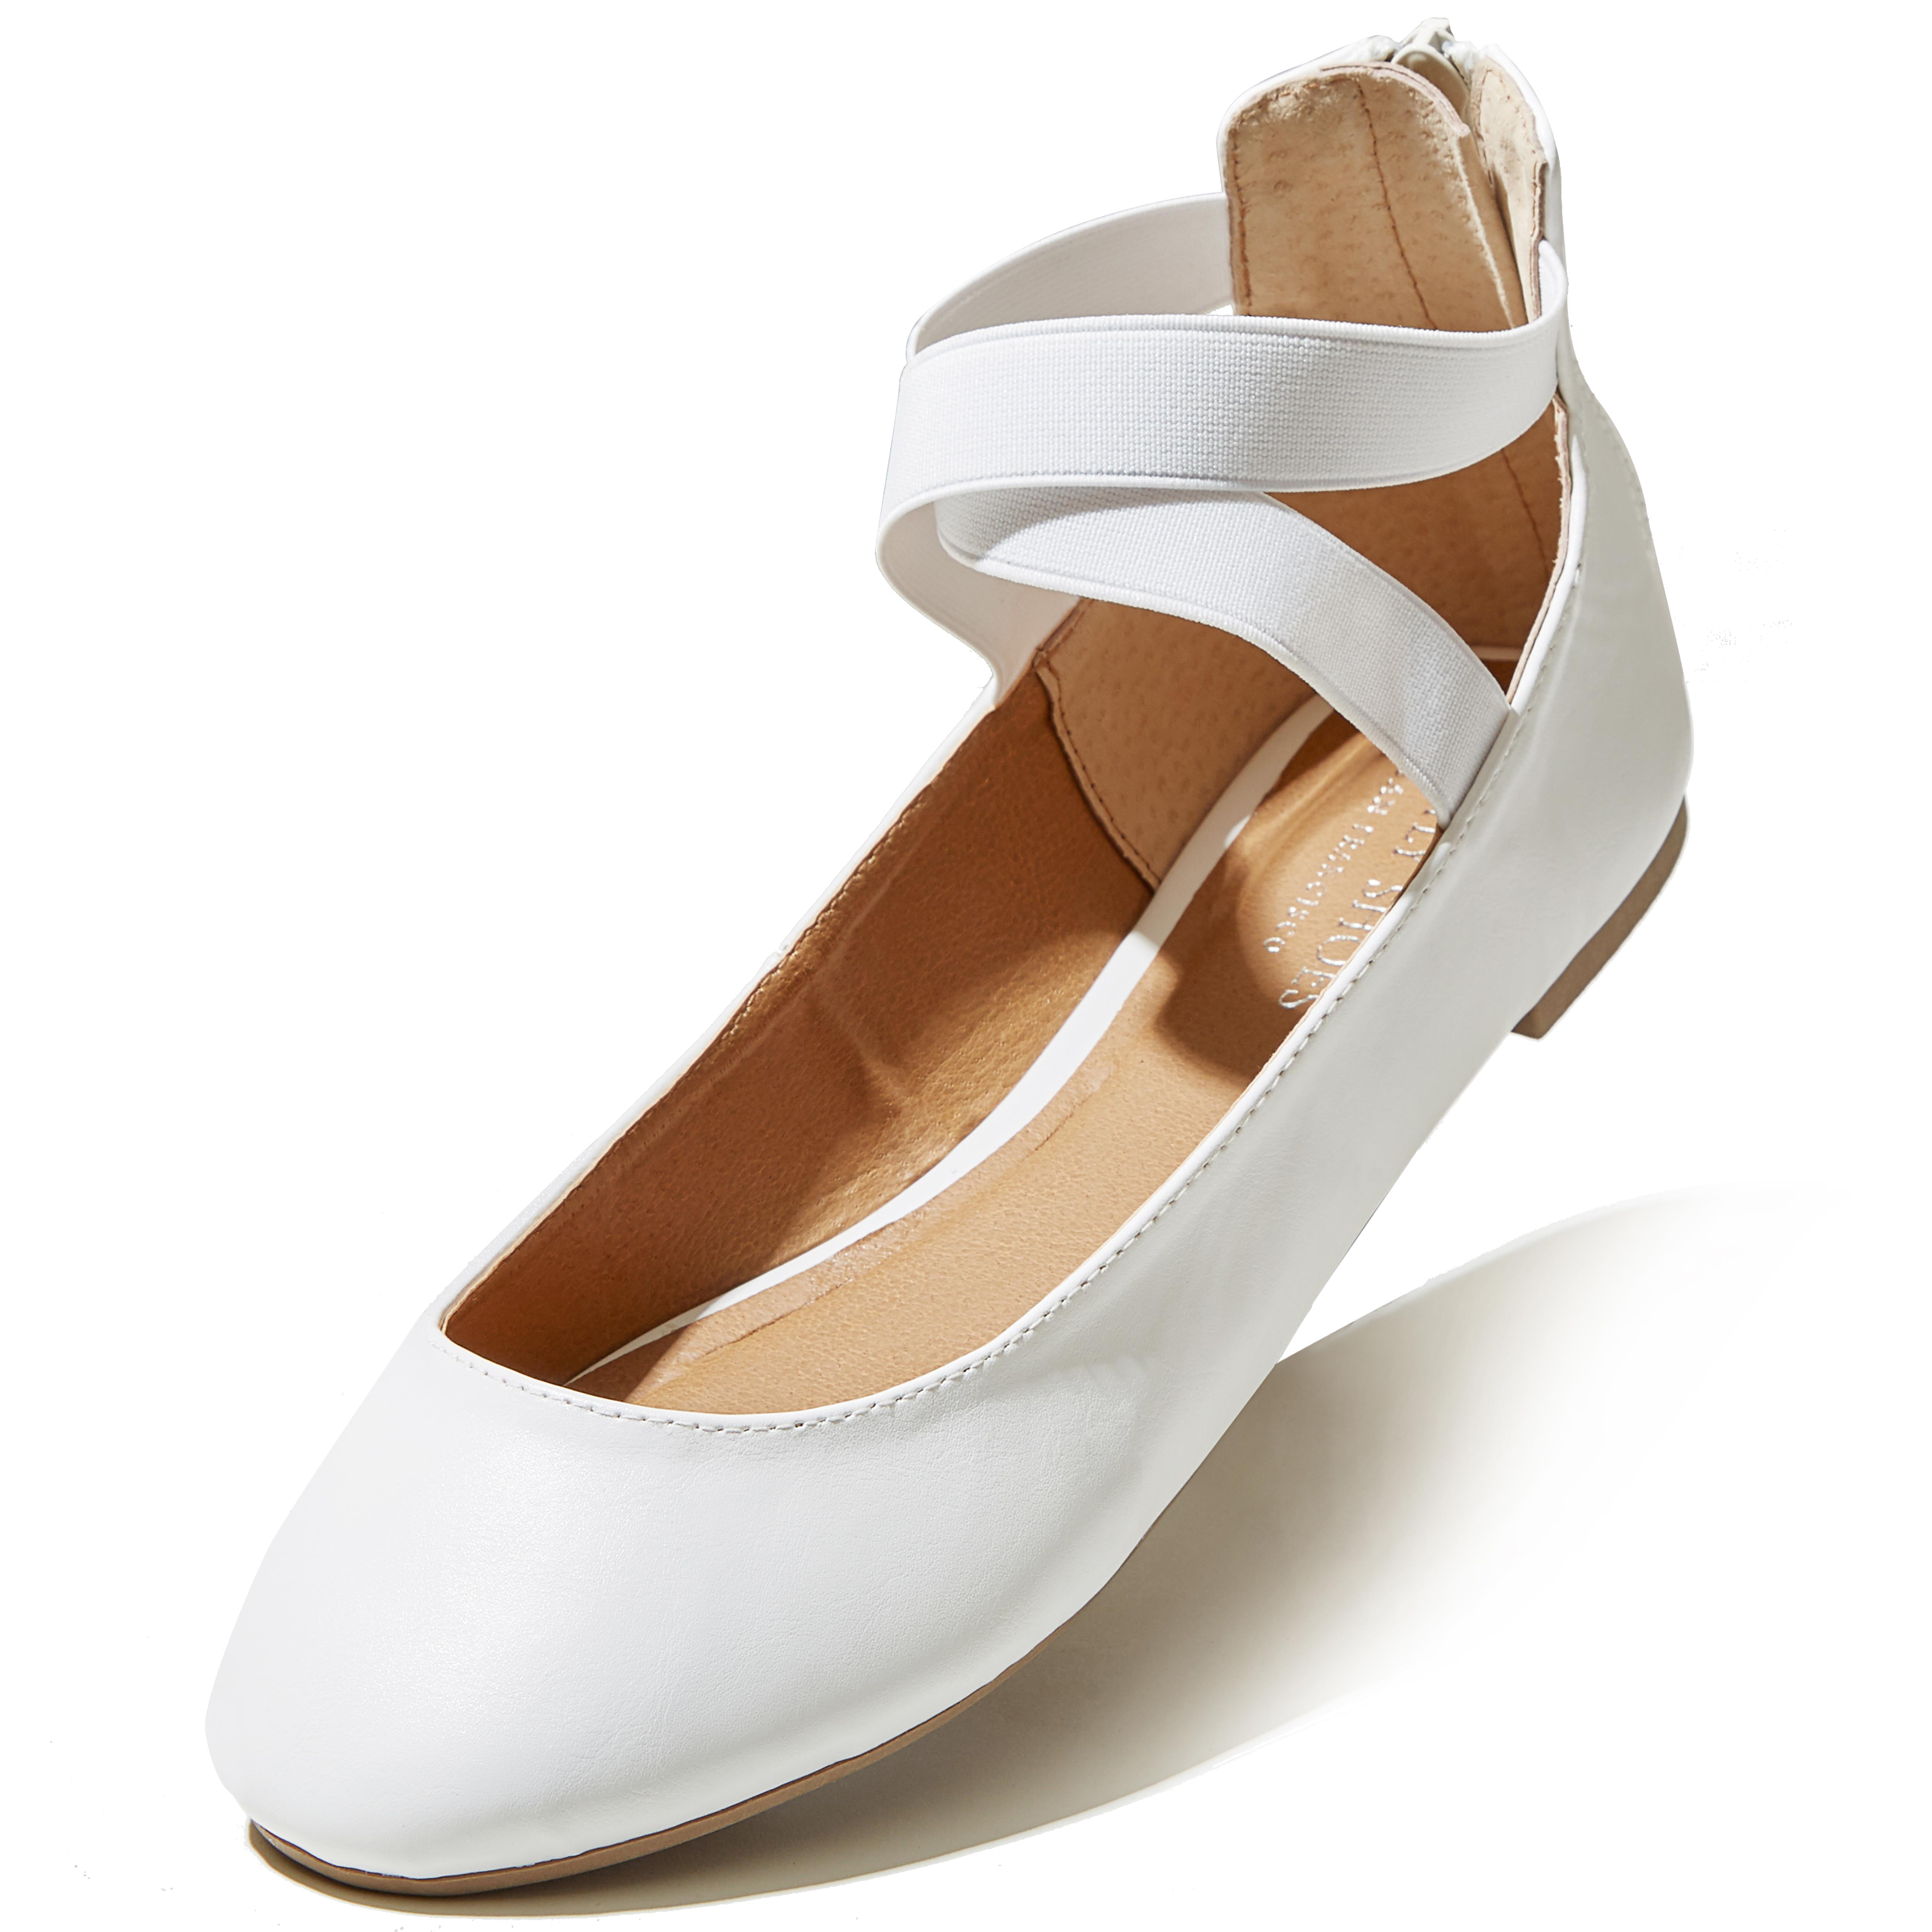 Women's Pointed Toe Ballet Flat Ankle Strap Ballerina Pumps Sandals Comfy Shoes 